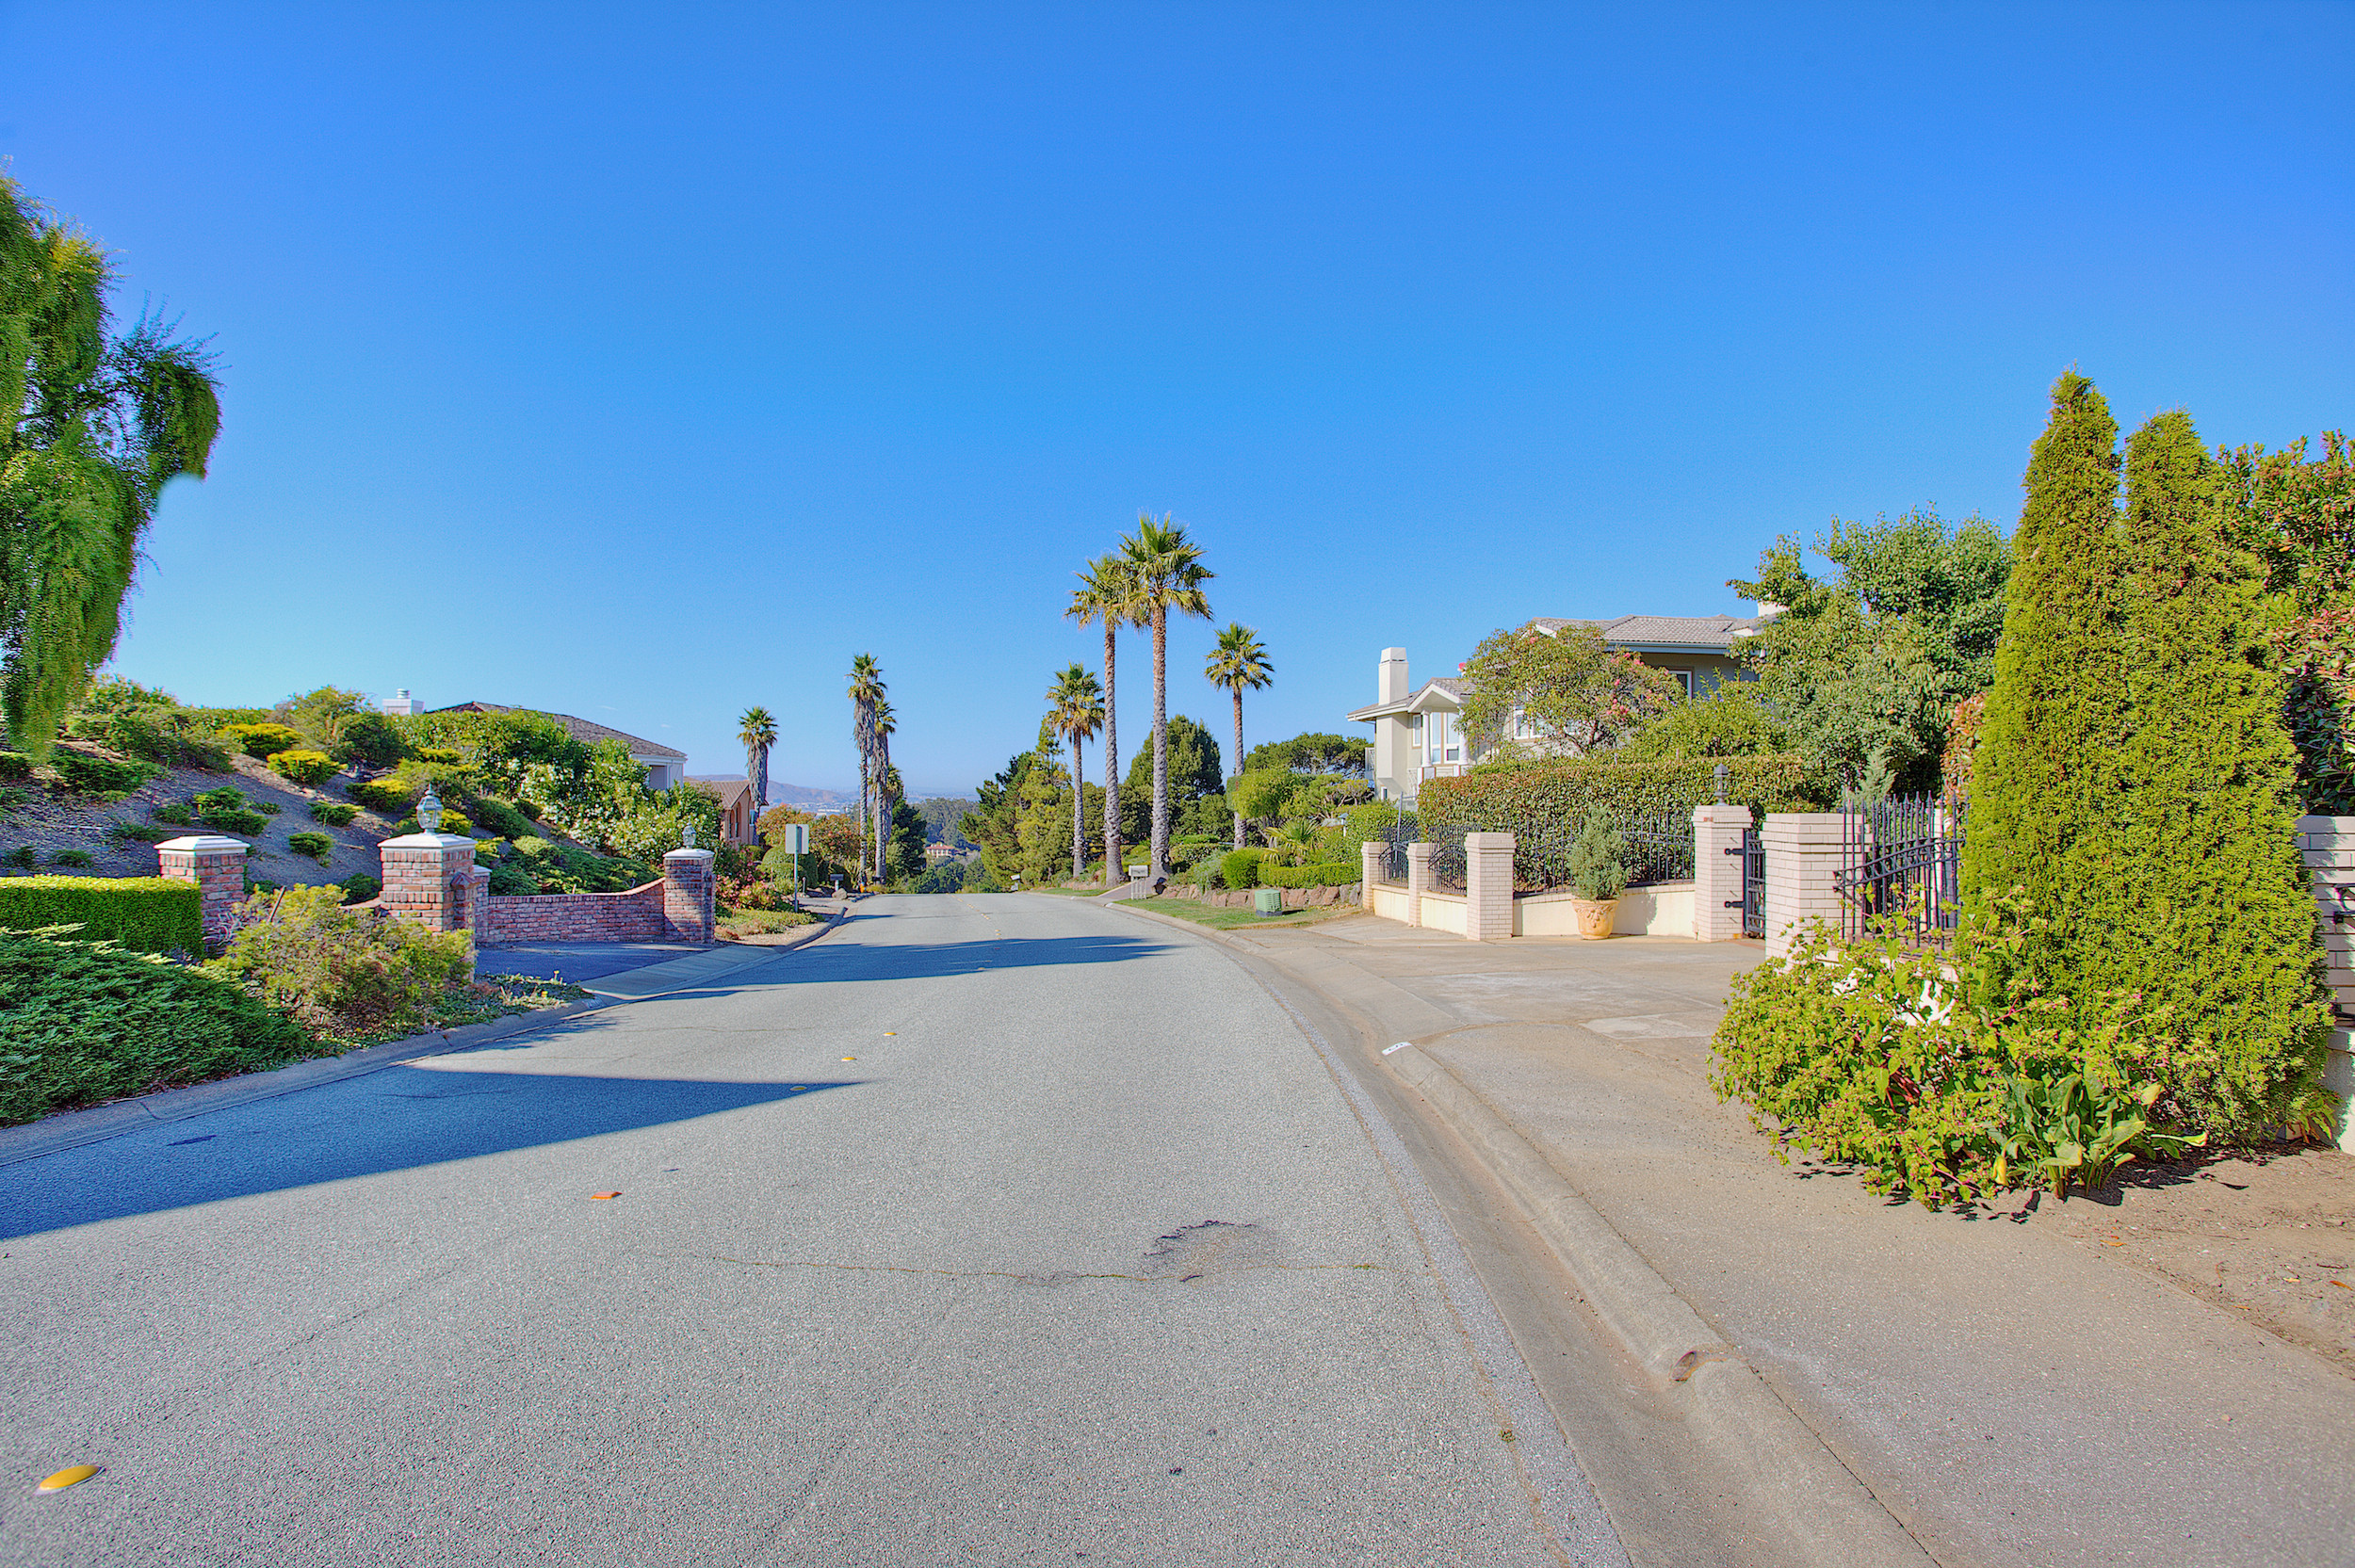 Street view of the Skyfarm neighborhood in Hillsborough, CA